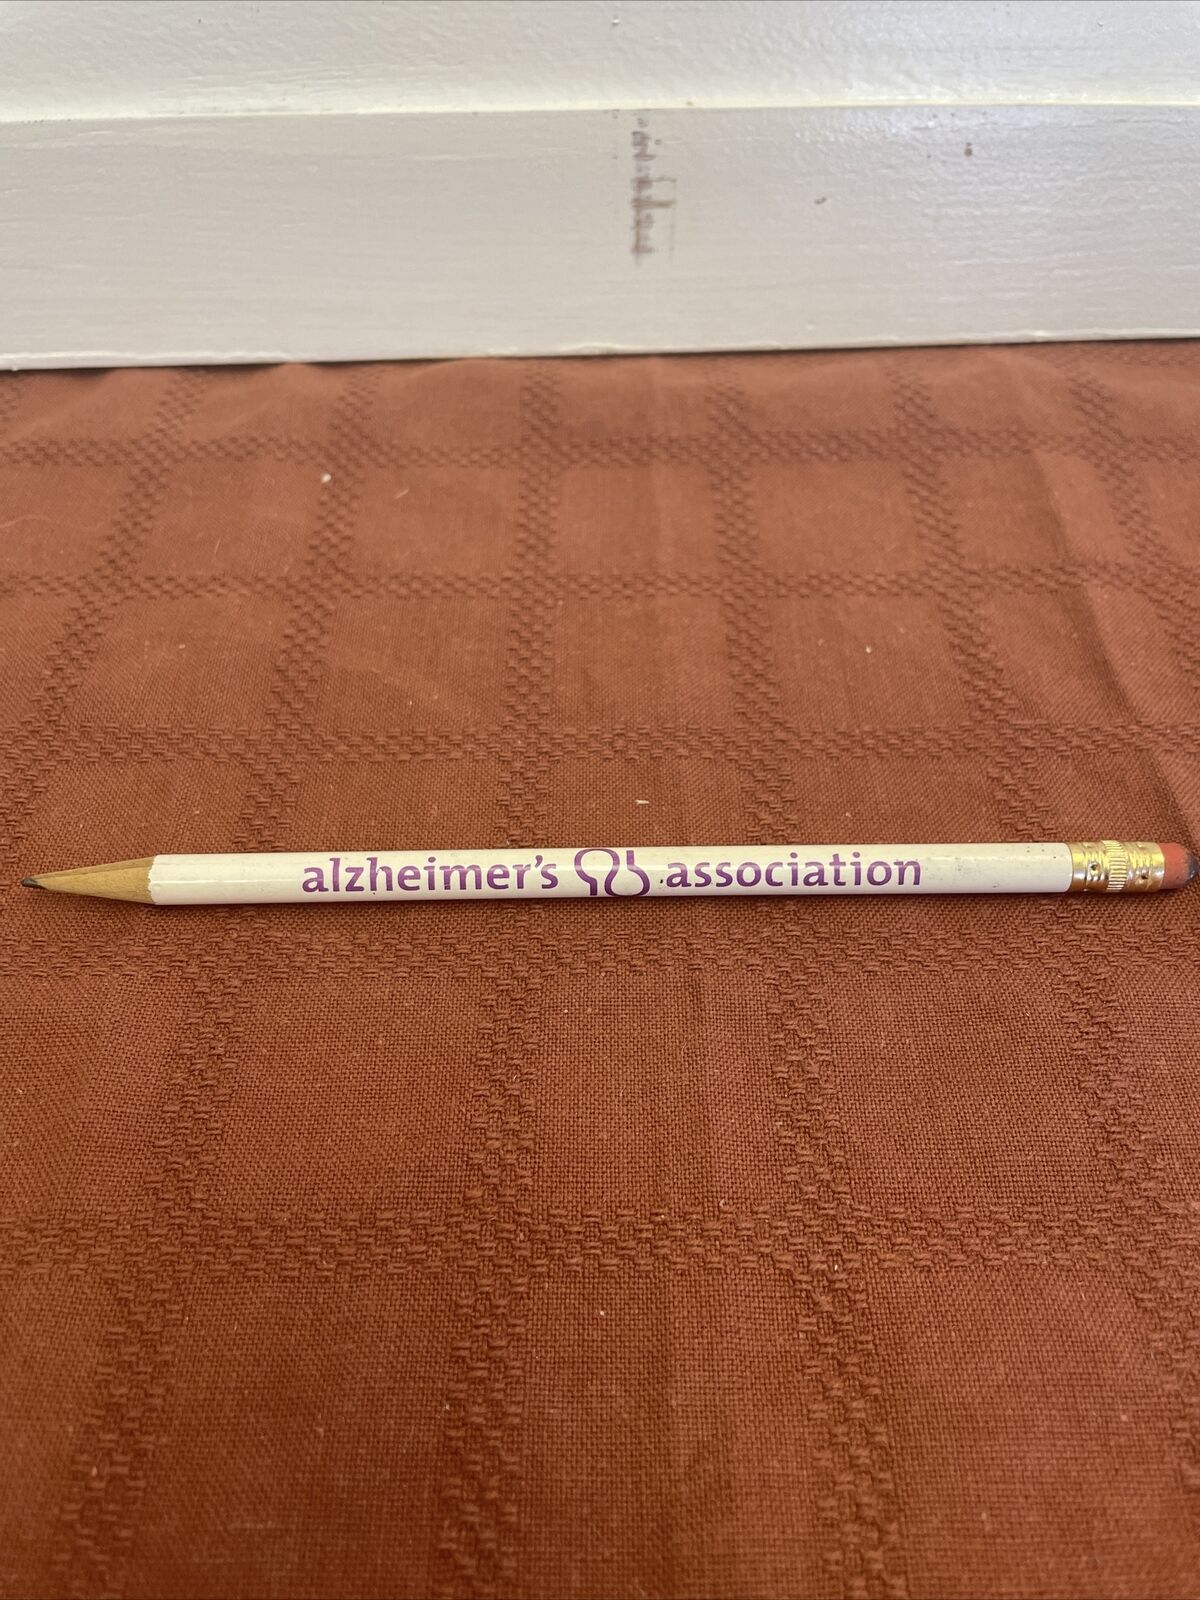 Vintage Alzheimer’s Association Wooden Pencil Medical Advertising